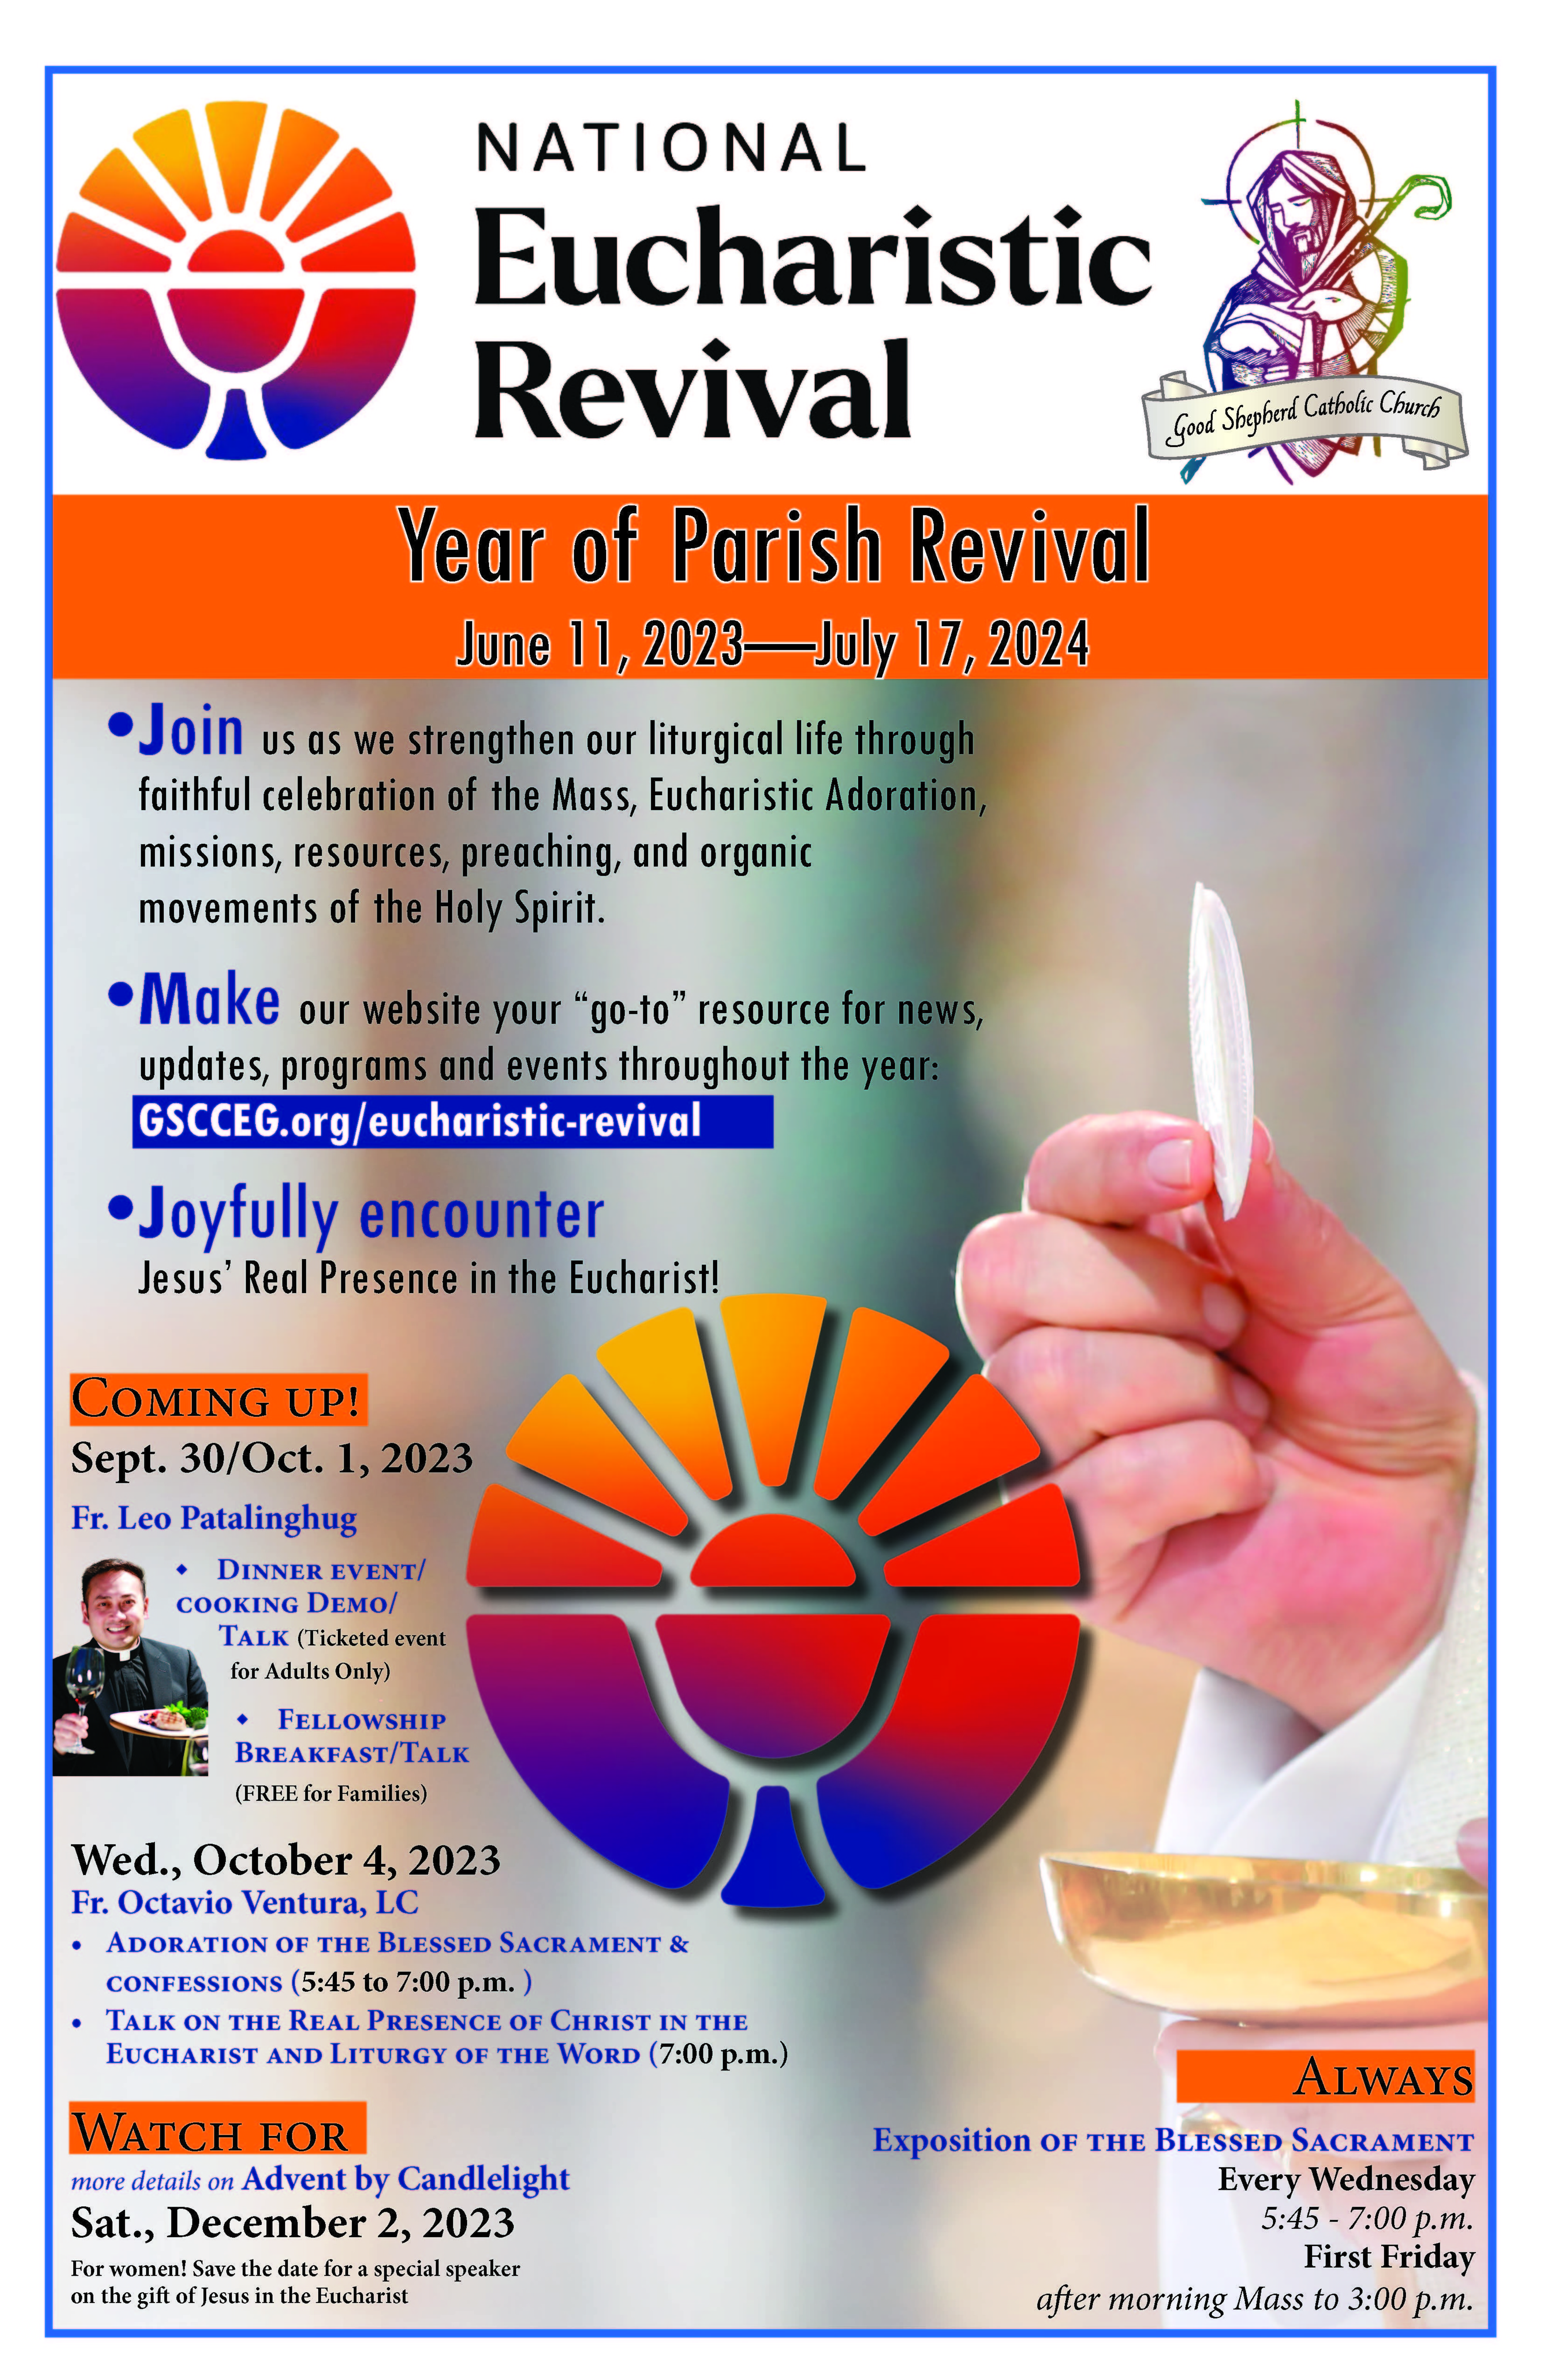 Eucharistic Revival Poster Rev072723